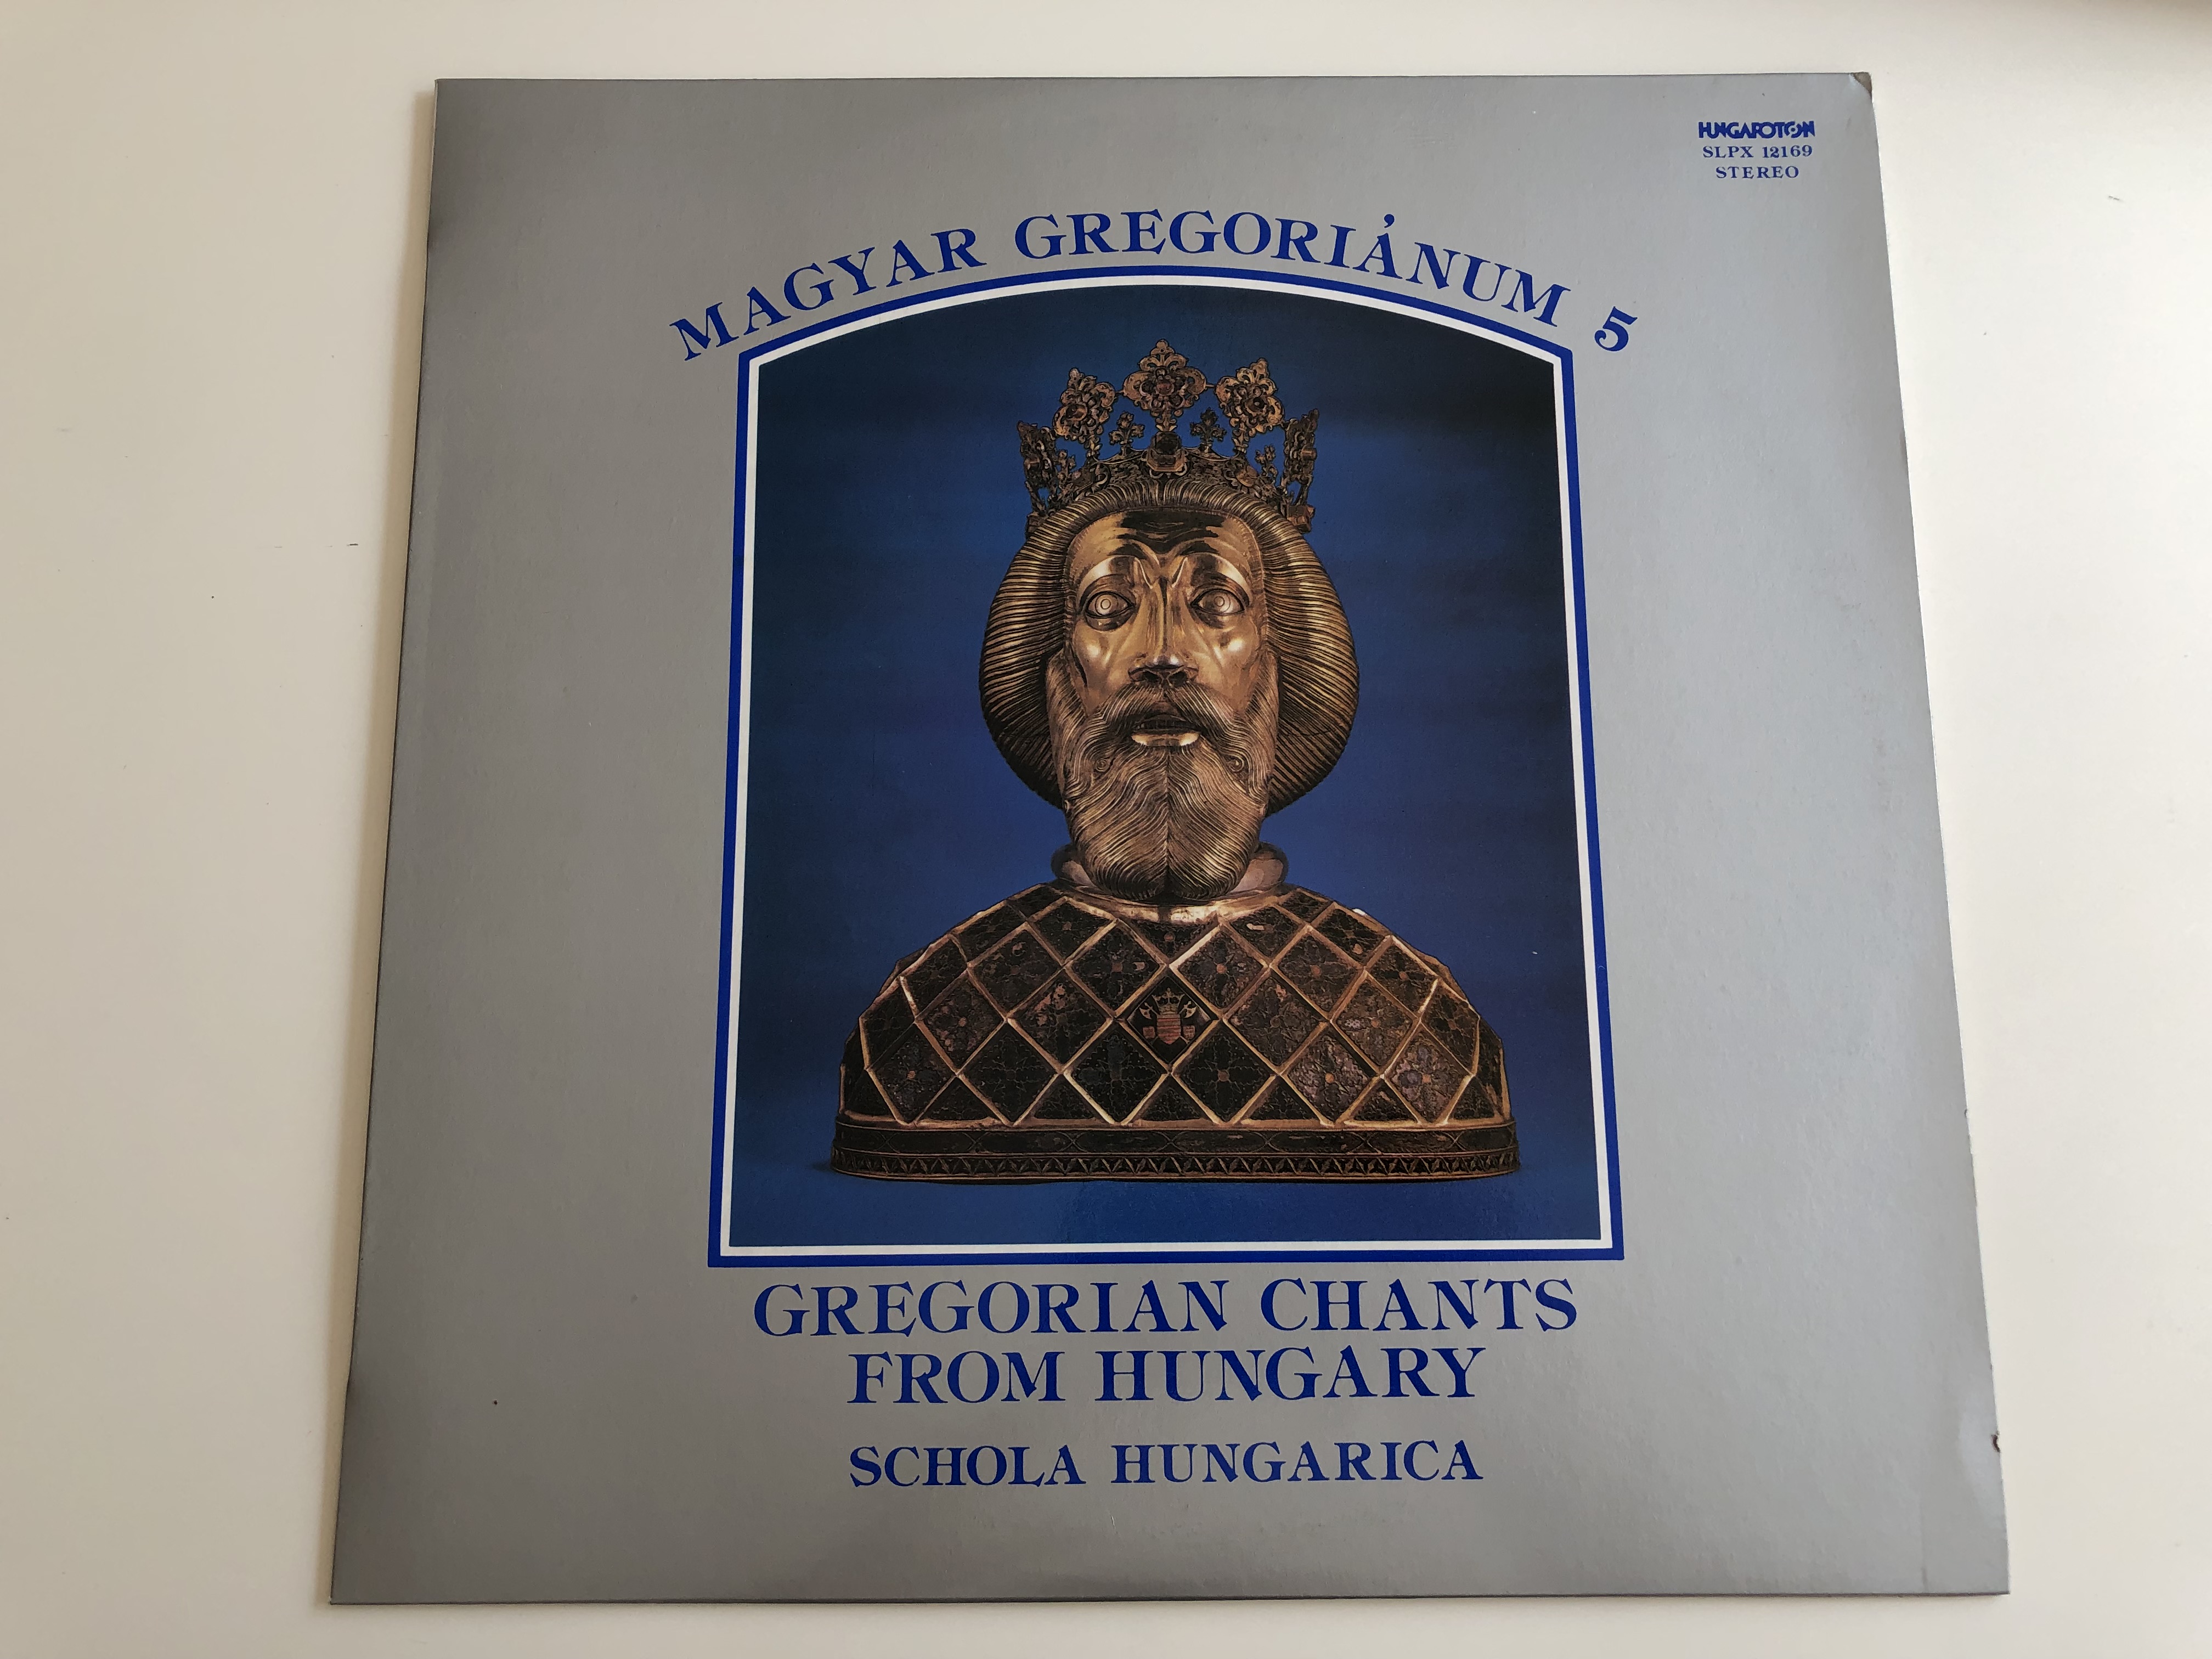 magyar-gregori-num-5-gregorian-chants-from-hungary-schola-hungarica-hungaroton-lp-stereo-slpx-12169-1-.jpg